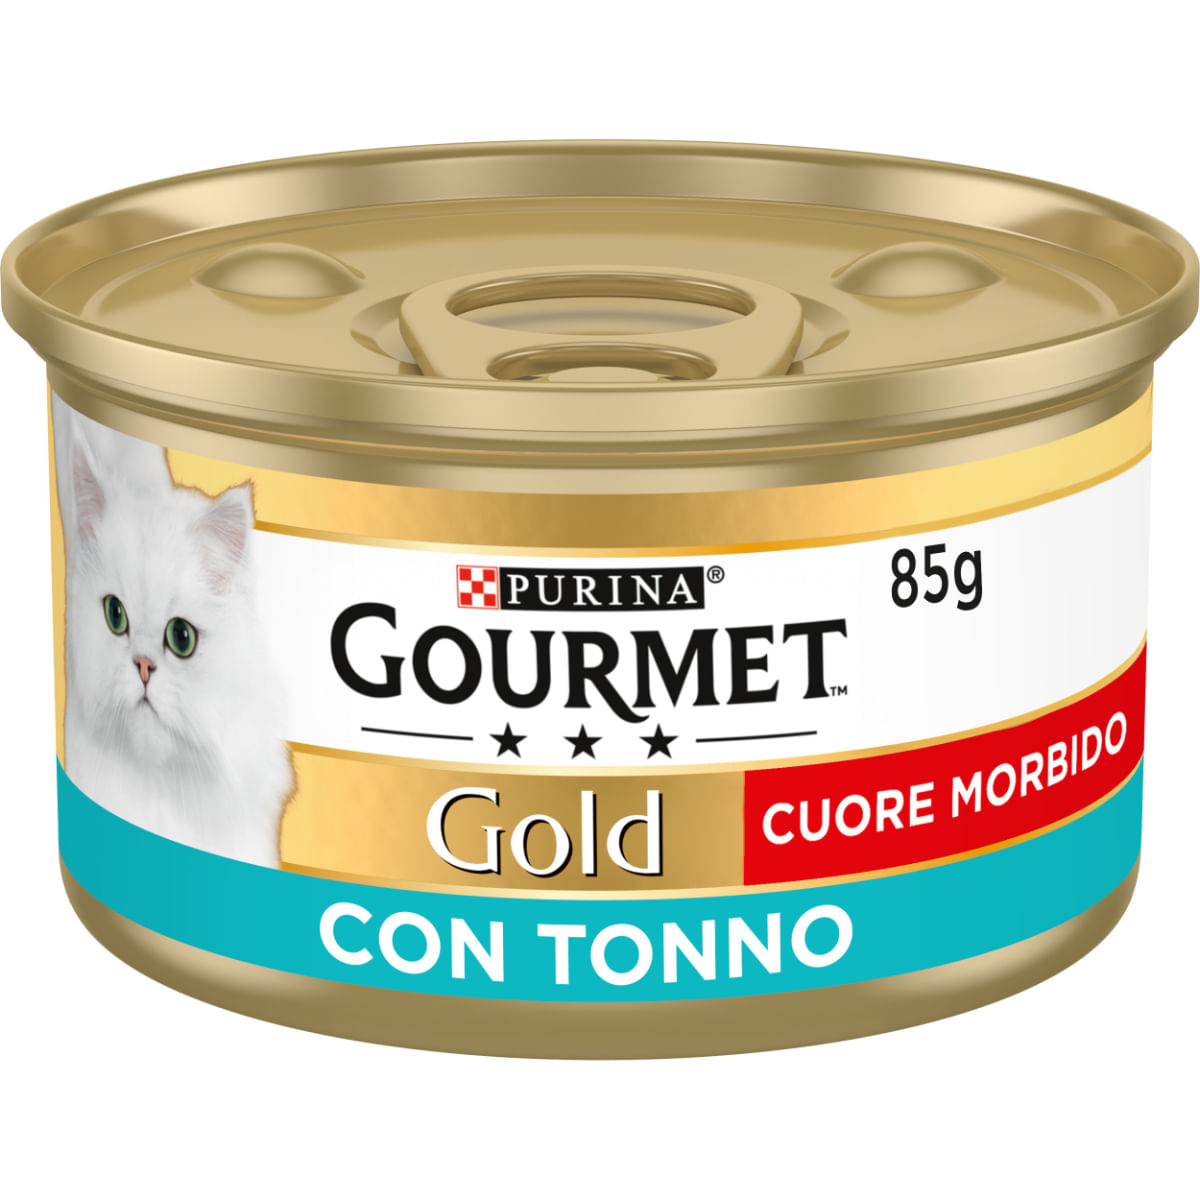 Gourmet Gold 85gr Cuore Morbido con Tonno